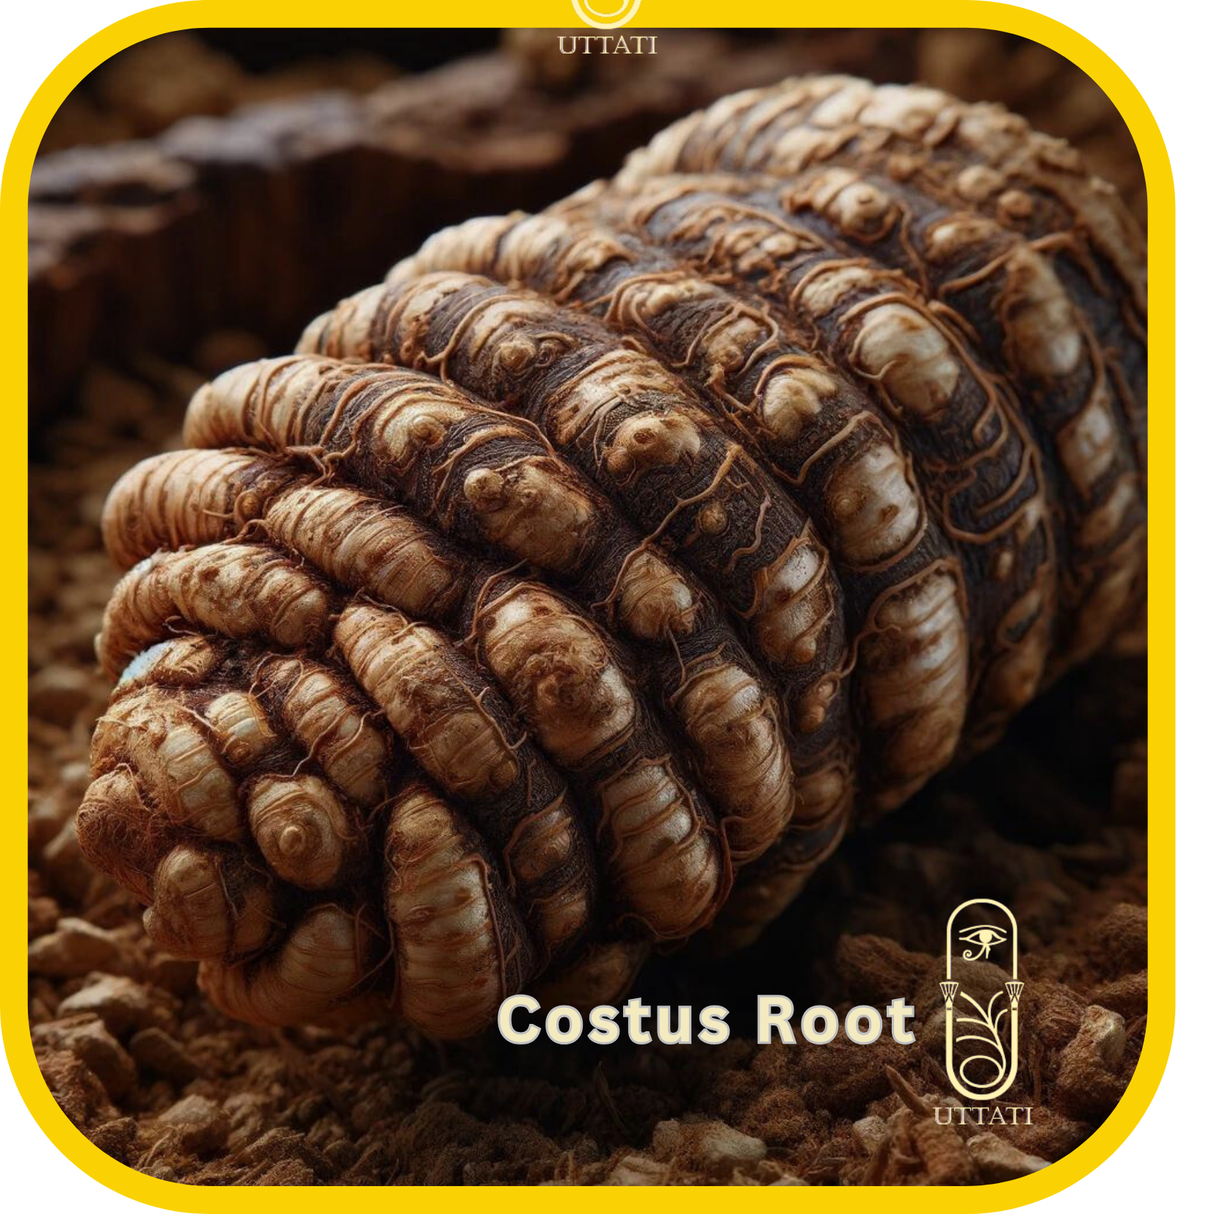 Costus Root